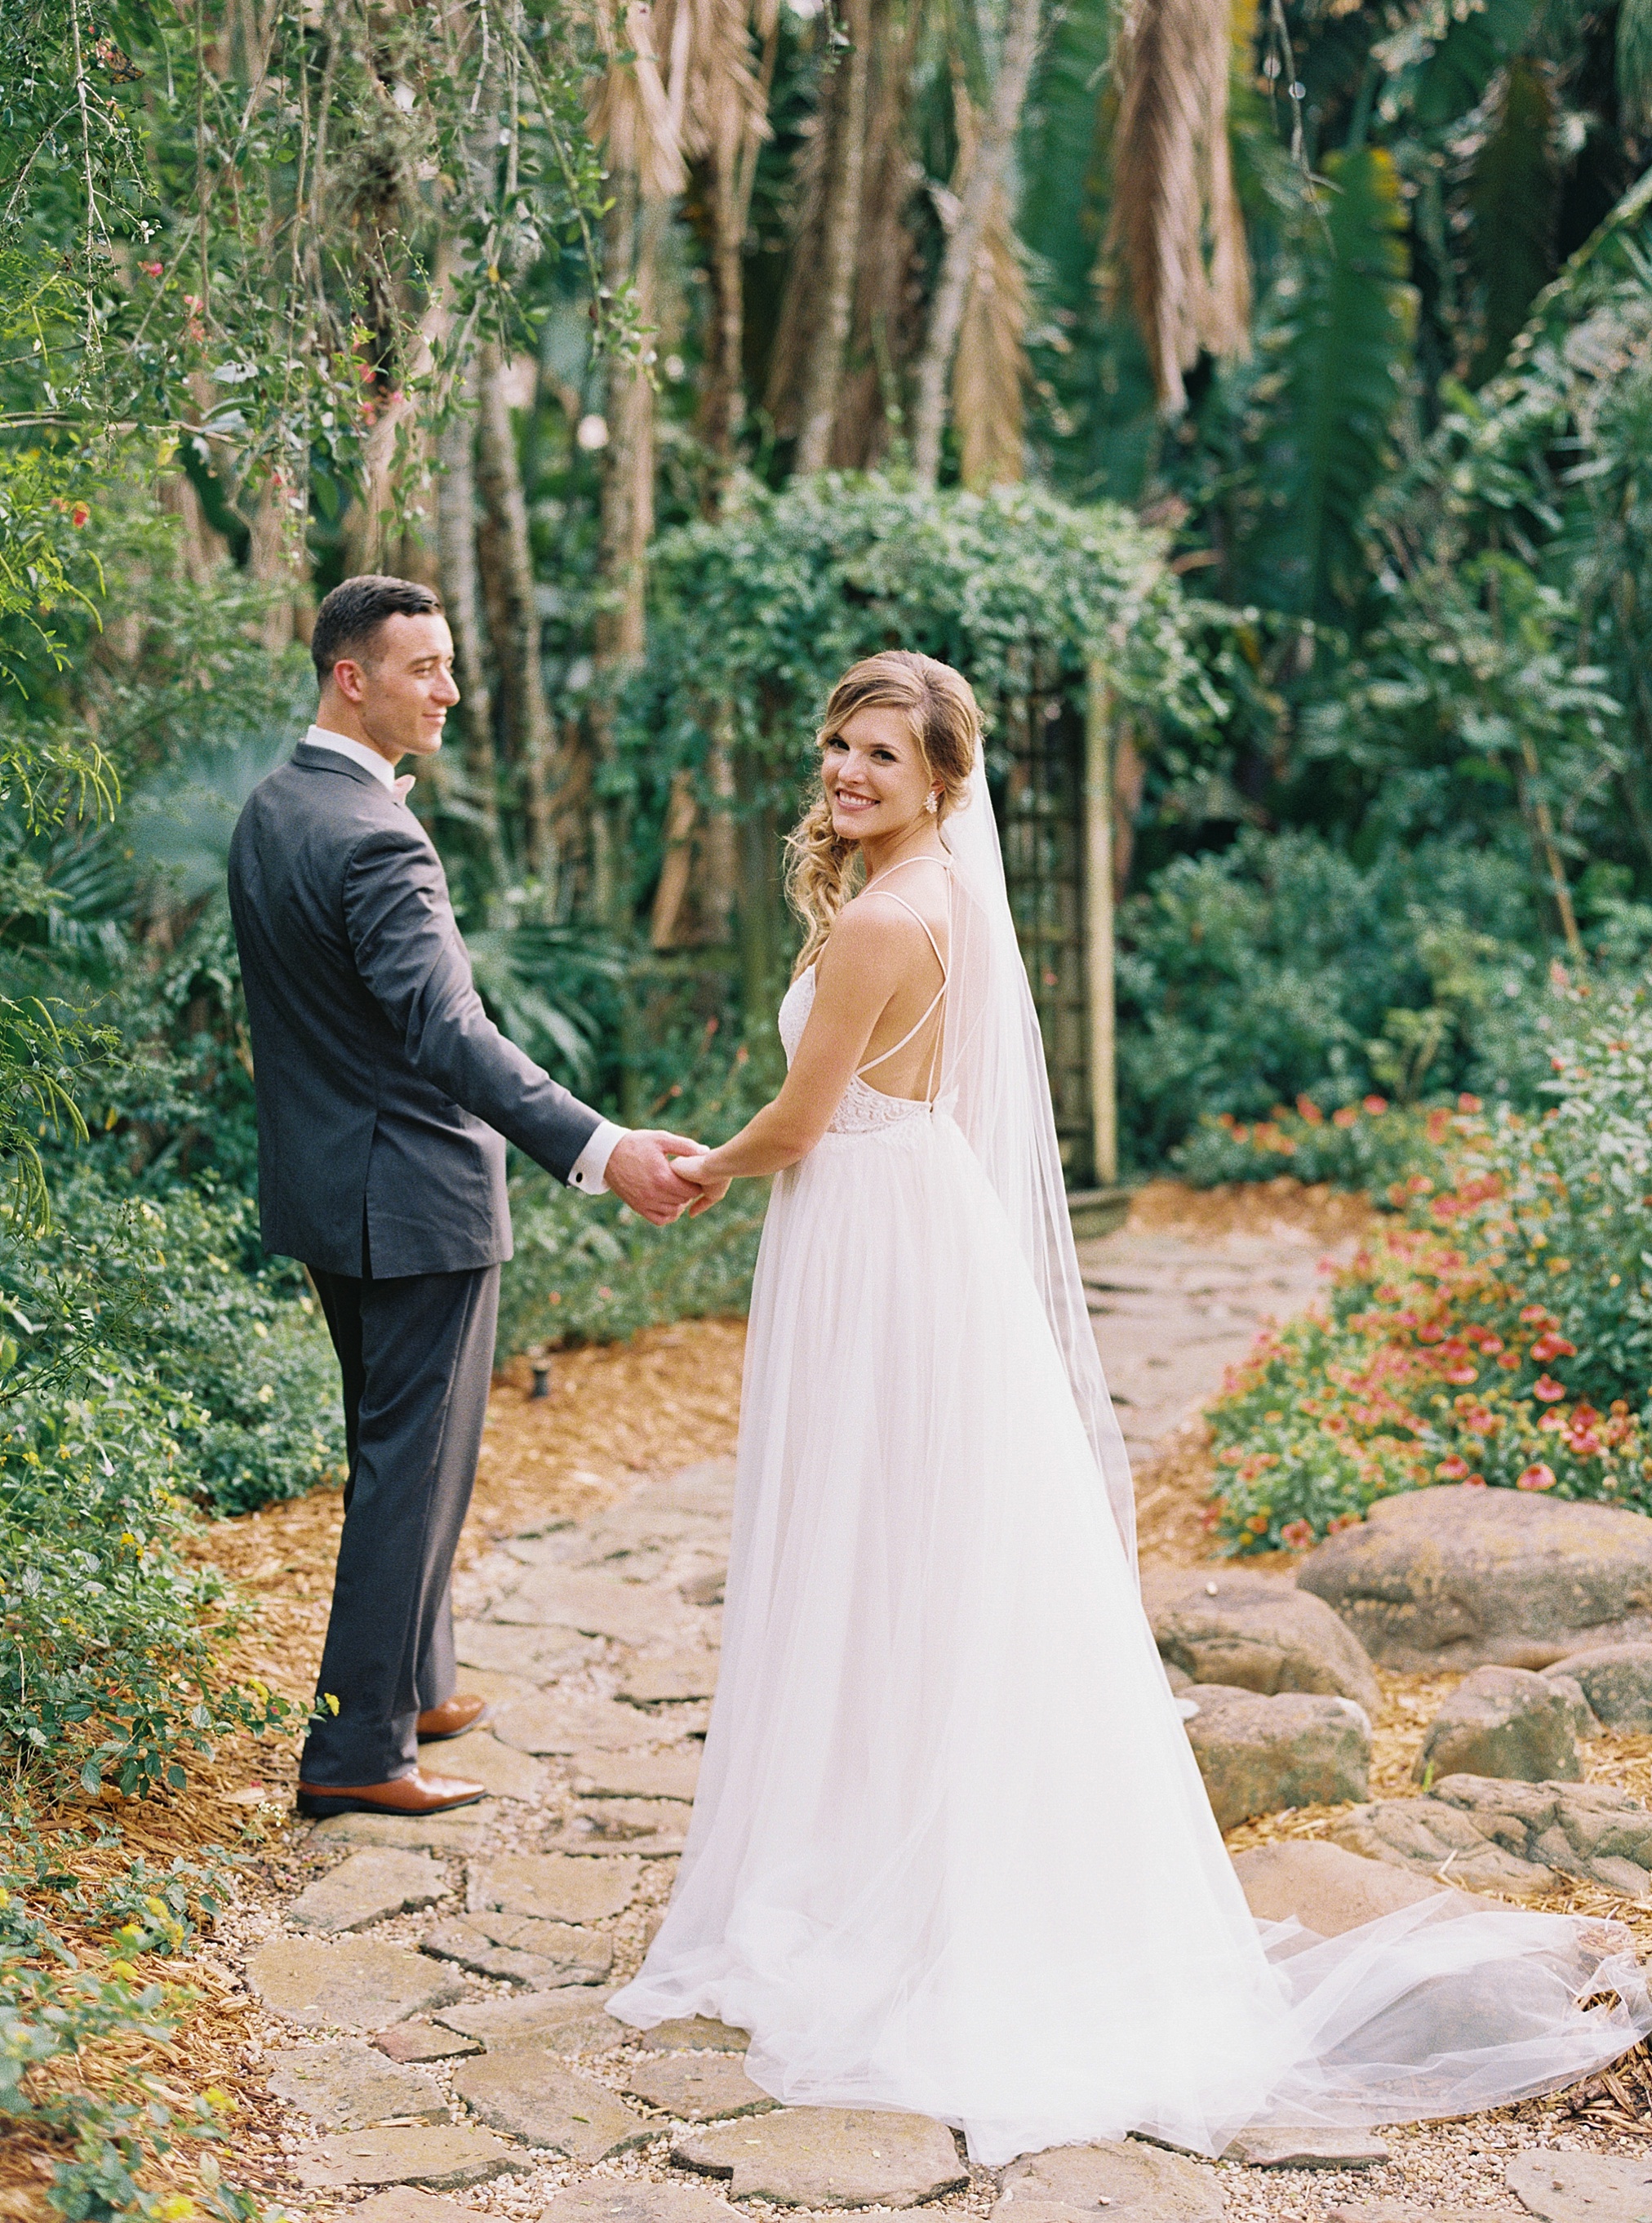 Sunken Gardens, Sarasota Wedding Photographer, St Petersburg Wedding, Tropical Wedding, Florida Tropical Wedding, Florida Film Photography